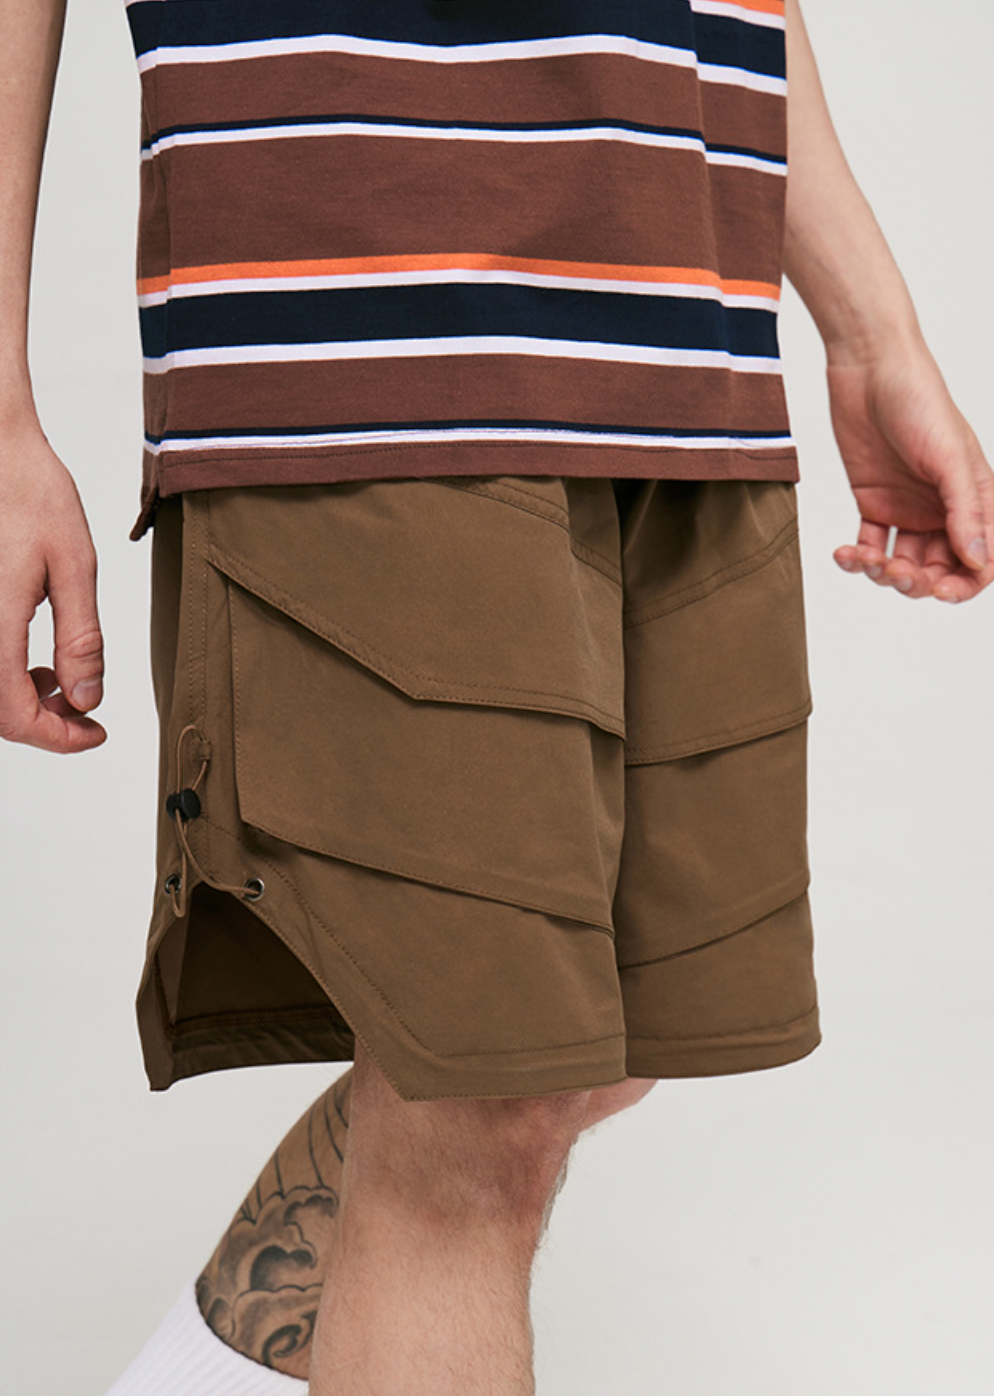 Cityboy Elastic Shorts in Brown